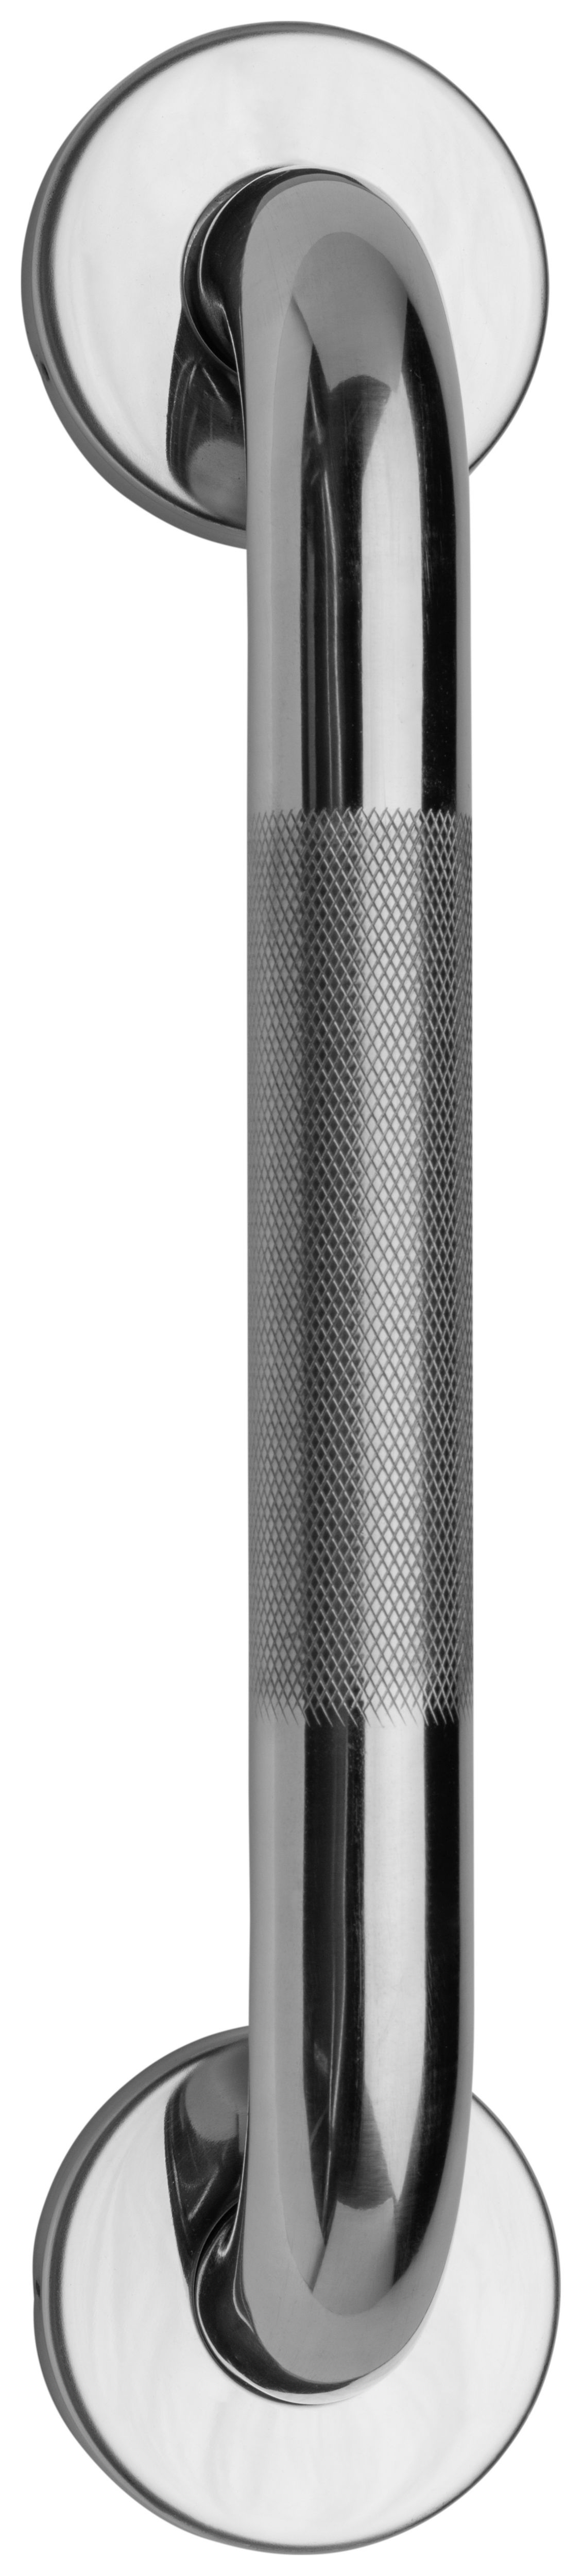 Image of Croydex Grab Bar with Anti-Slip Grip - 300mm